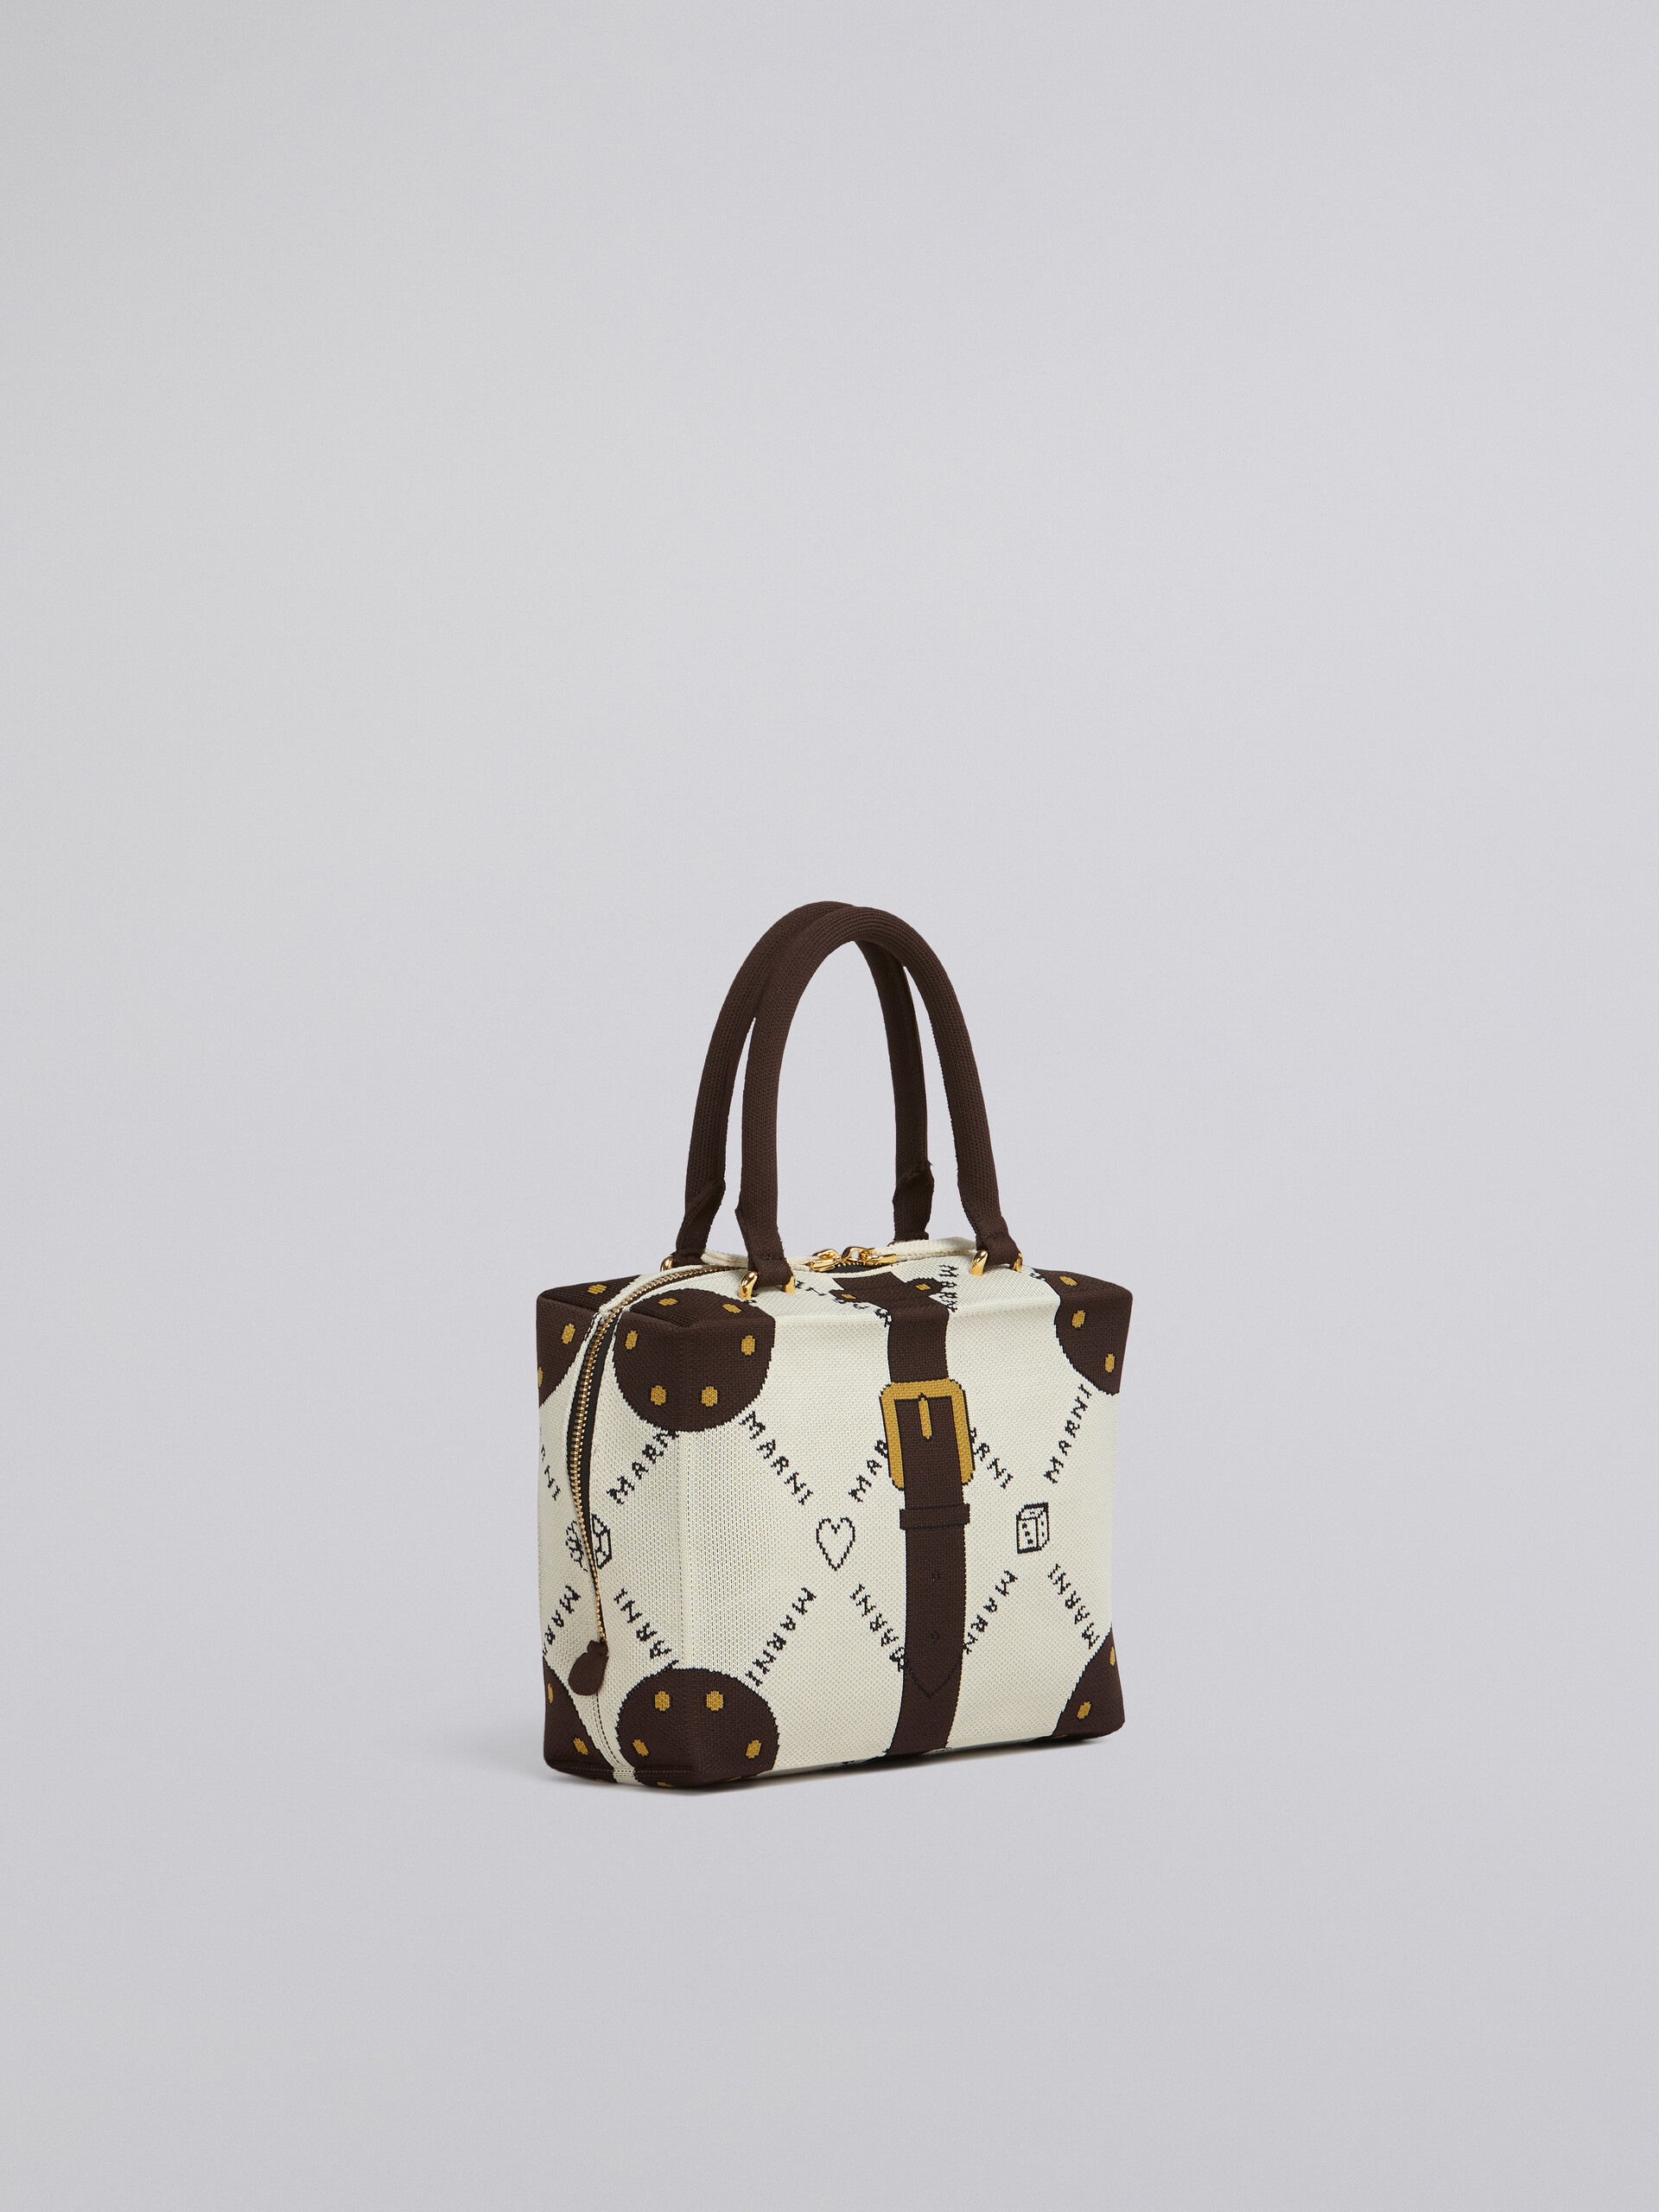 CUBIC bag in white Marnigram trompe-l'œil jacquard - Handbags - Image 6